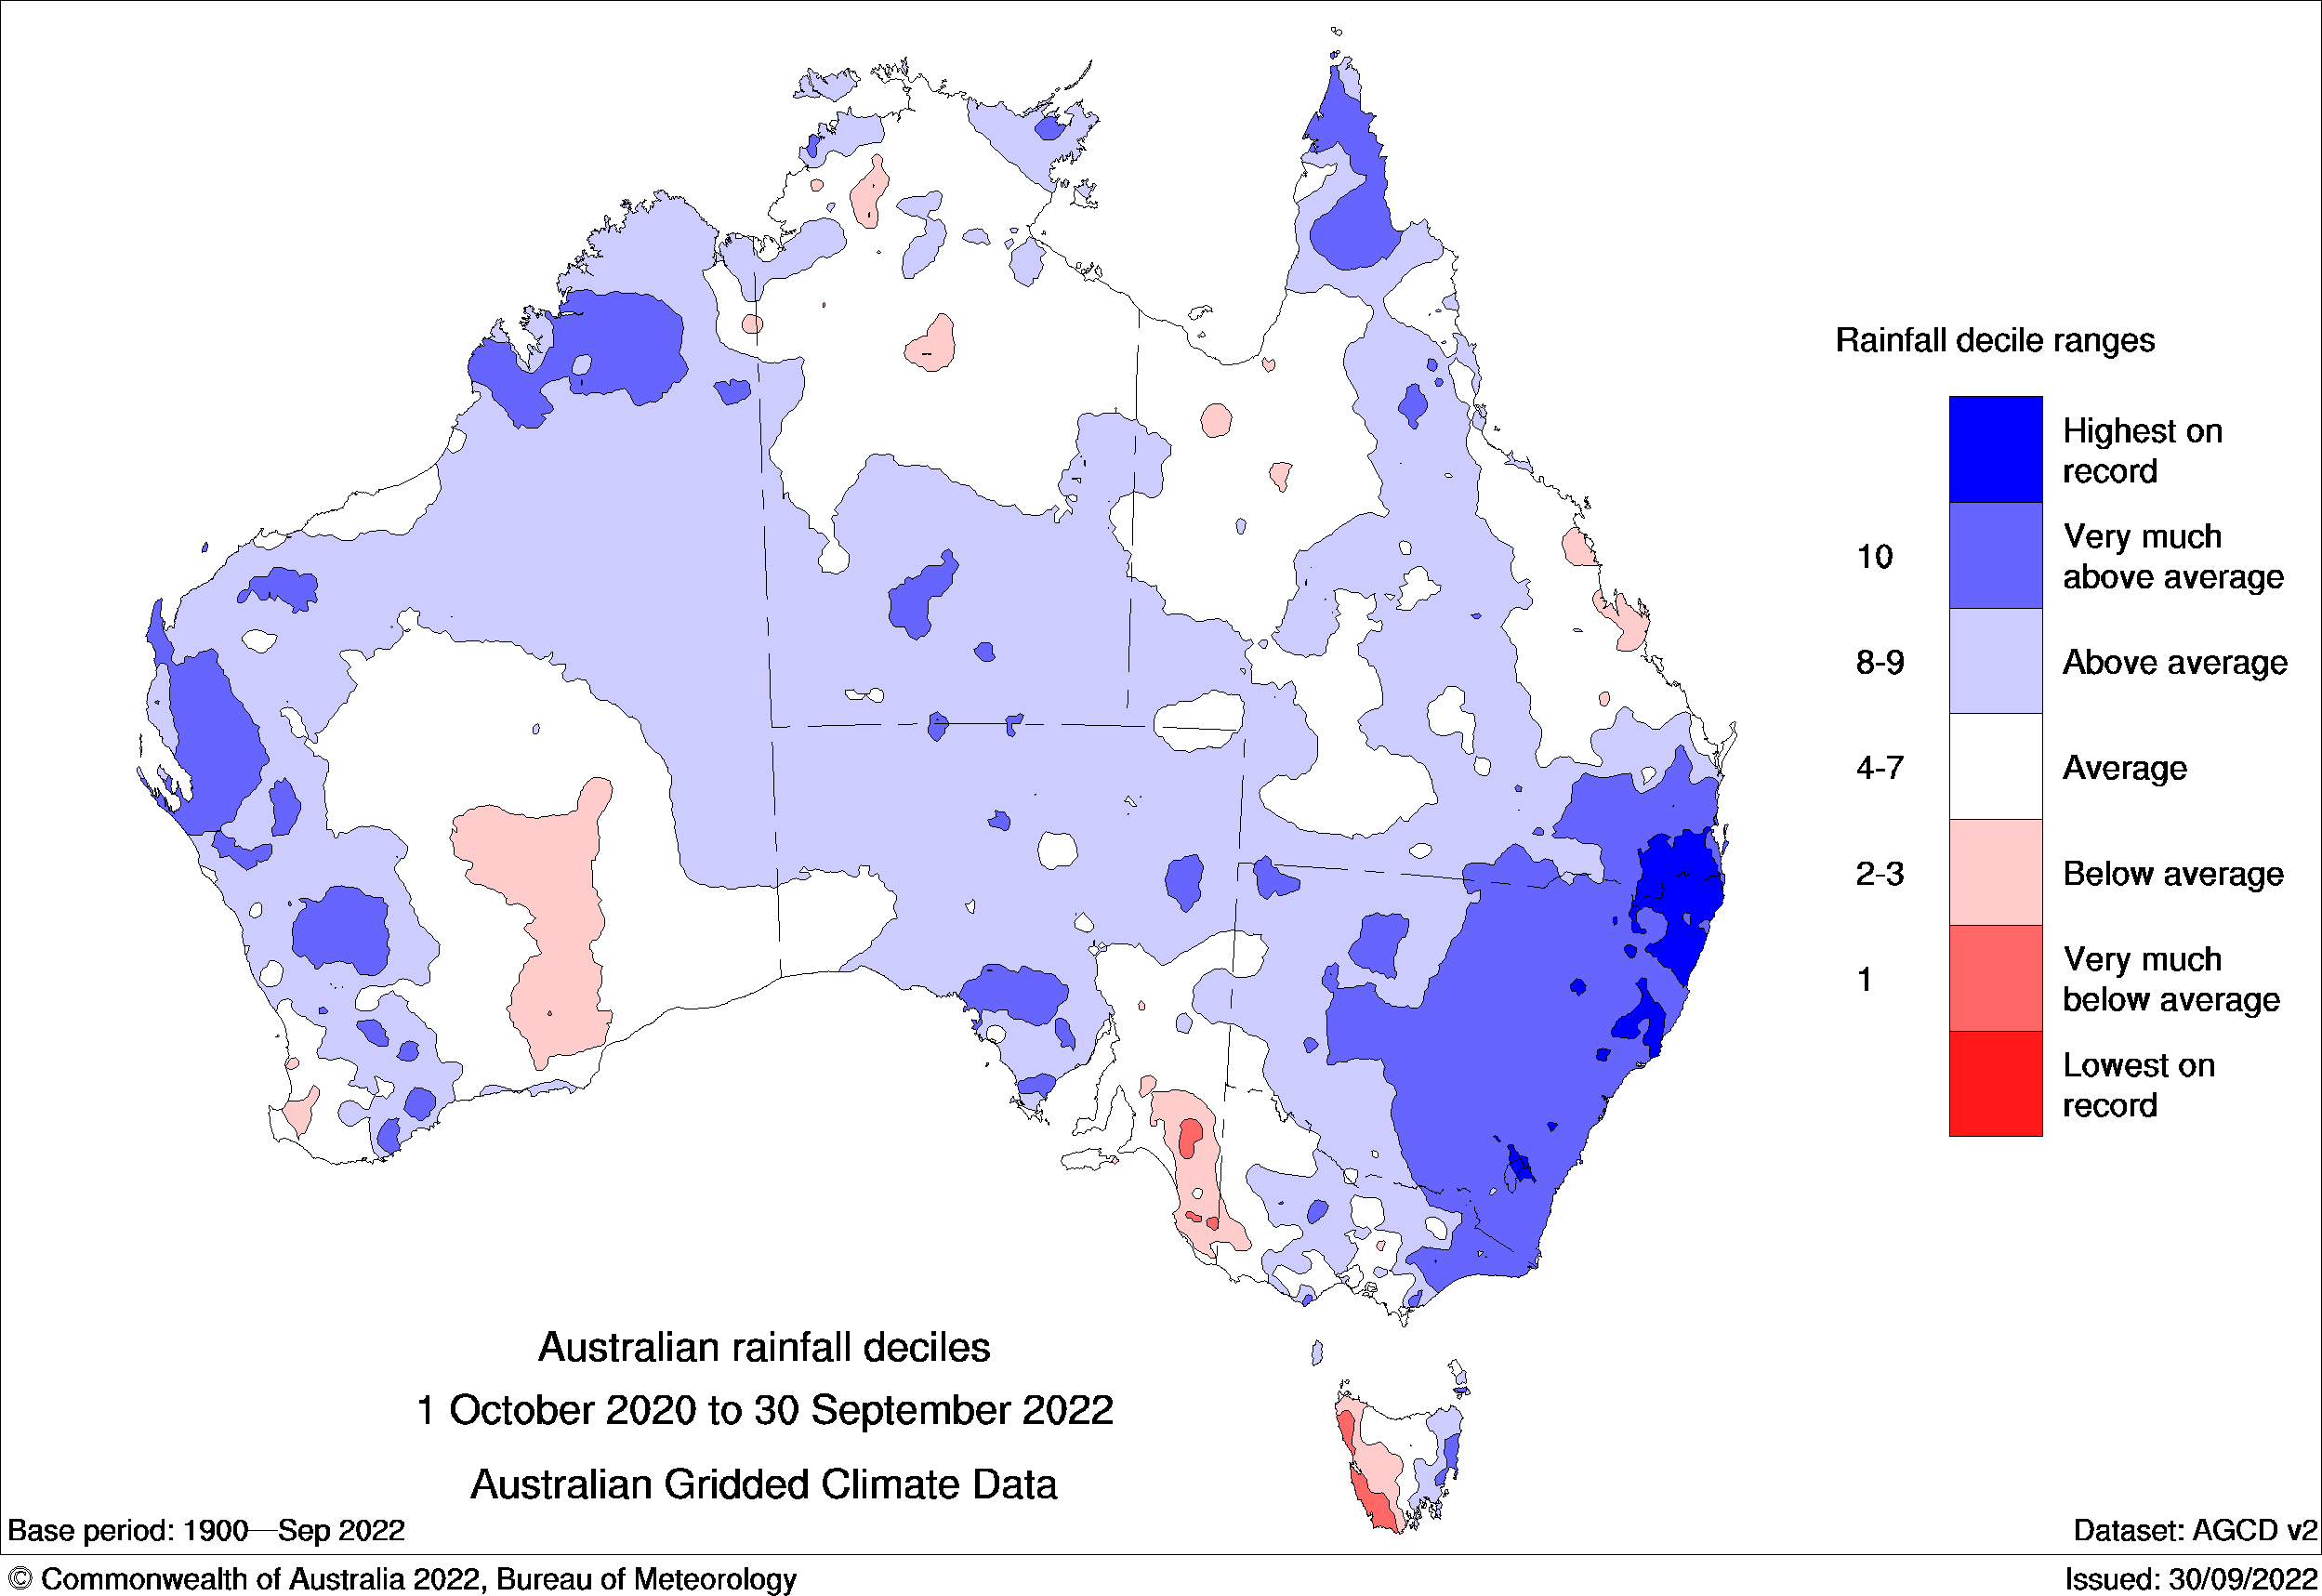 Map of Aus, distinctly blue on the east coast.